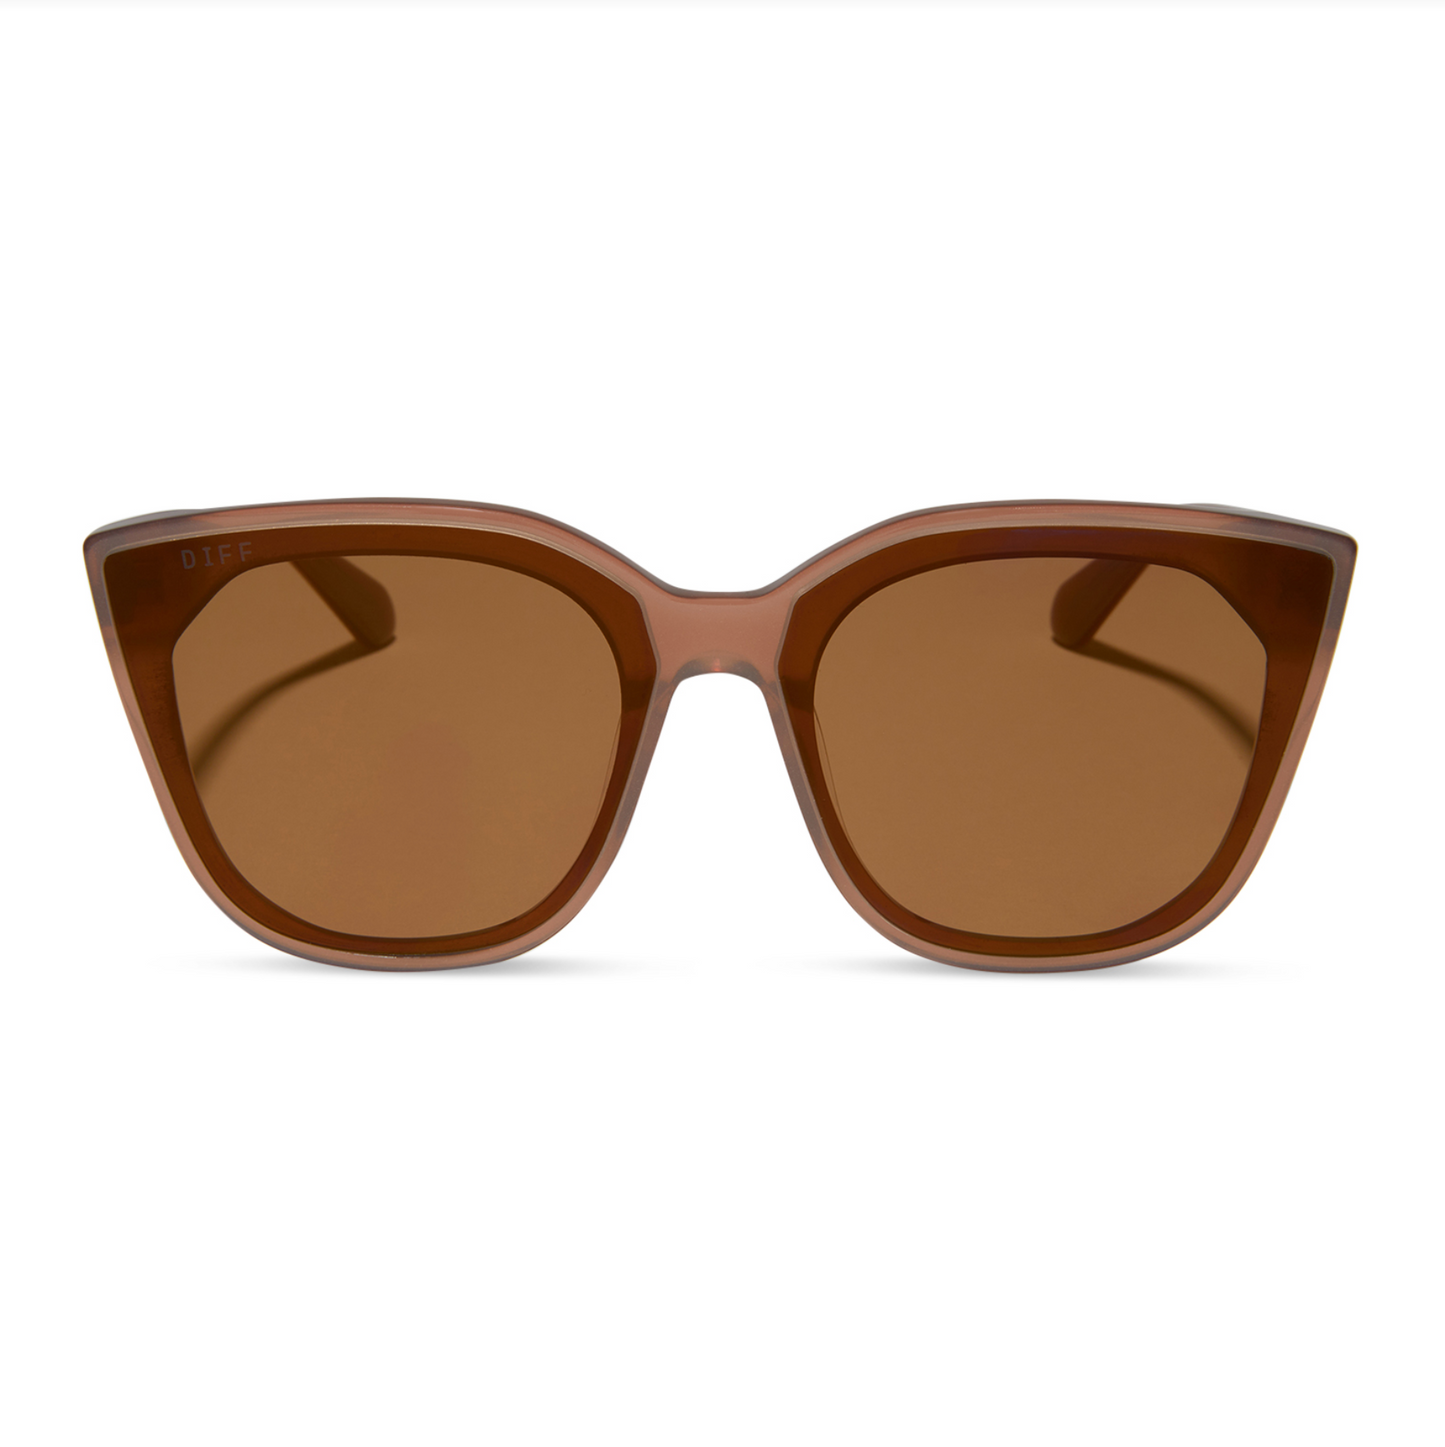 DIFF Eyewear - Gjelina - Macchiato Brown Flash Sunglasses